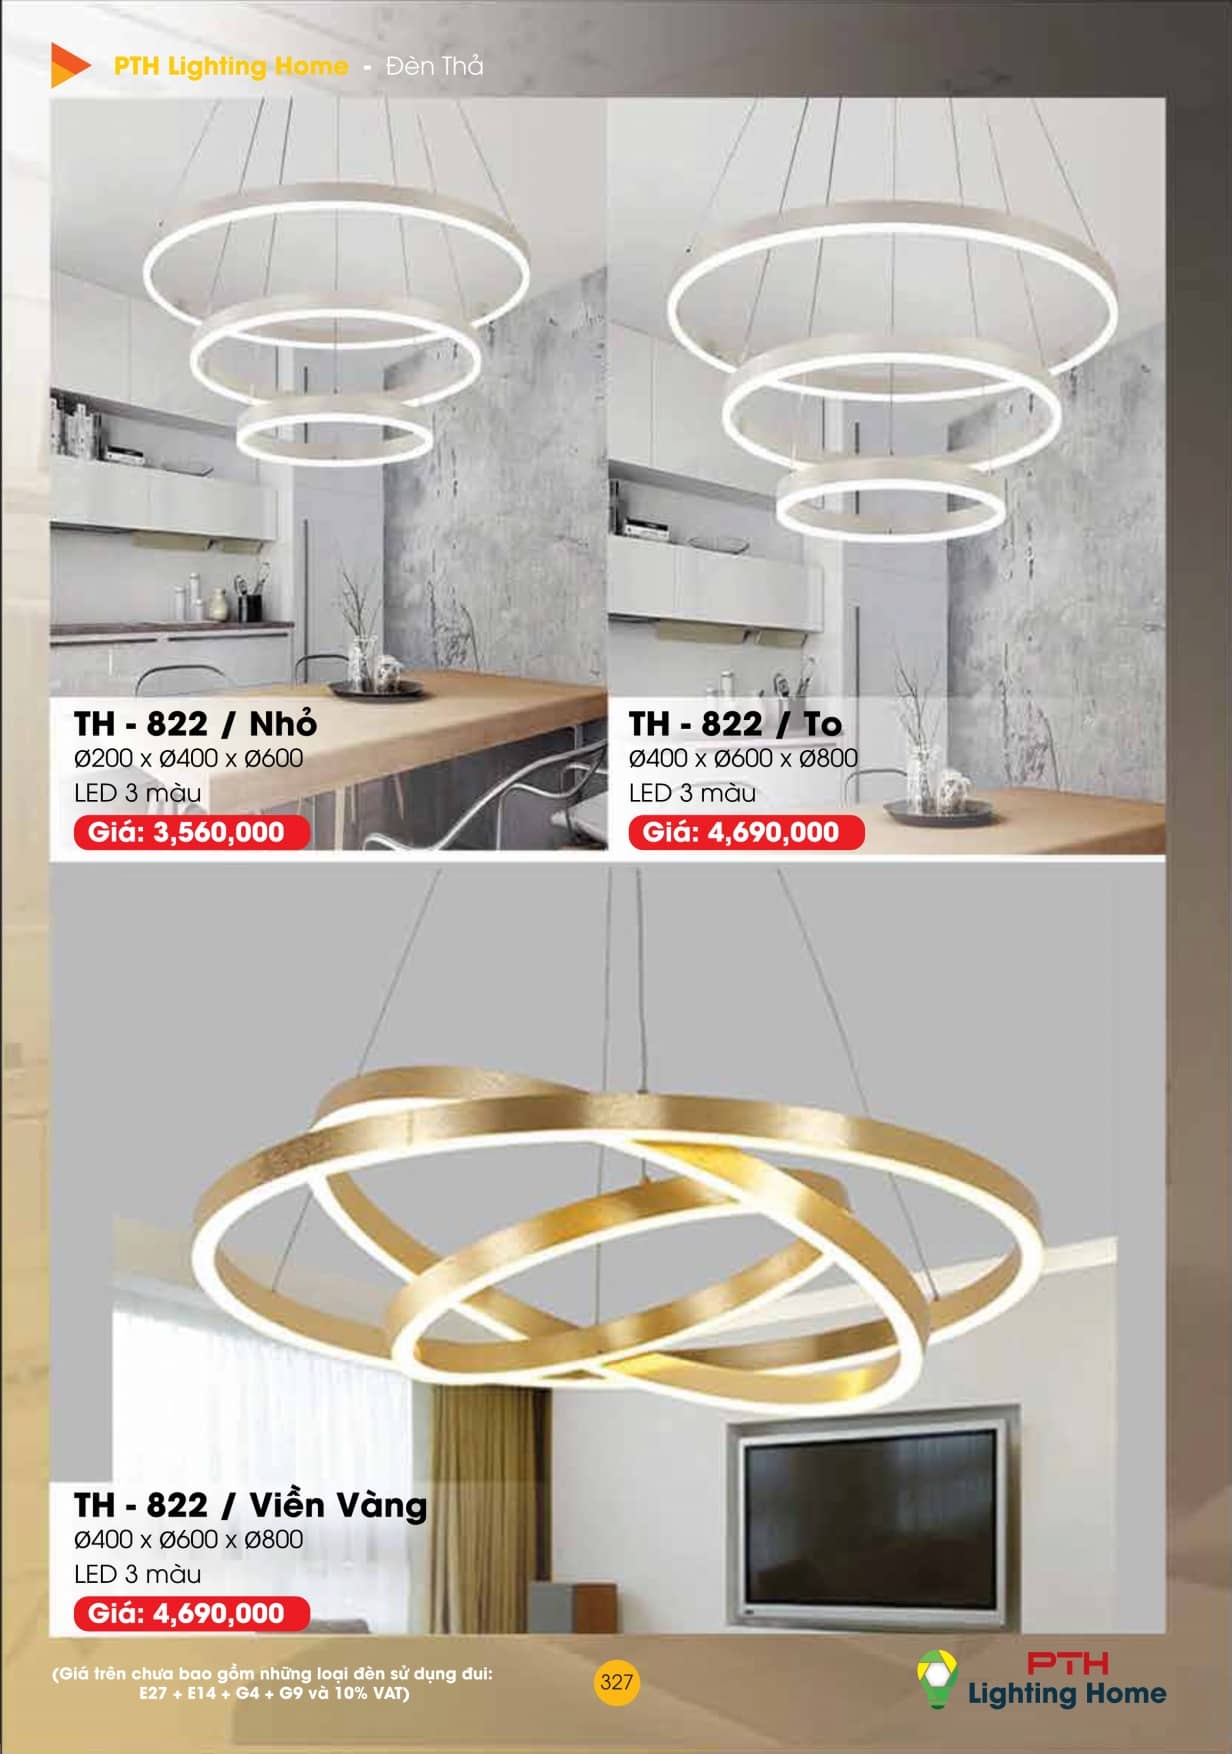 catalogue-bang-gia-den-led-trang-tri-pth-lighting-home-329